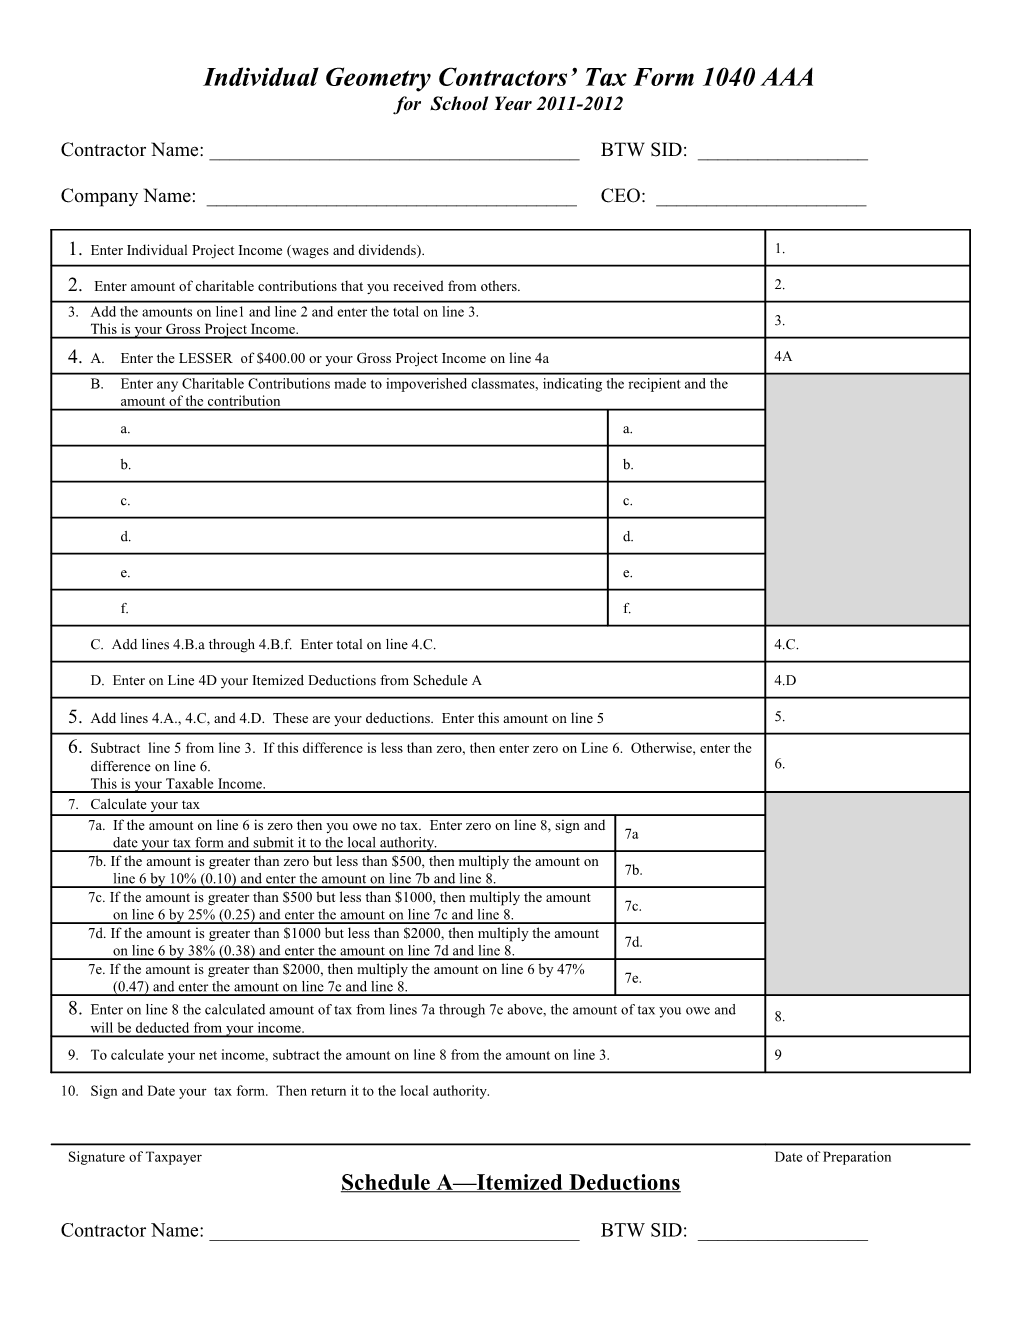 Individual Geometry Contractors Tax Form 1040 AAA